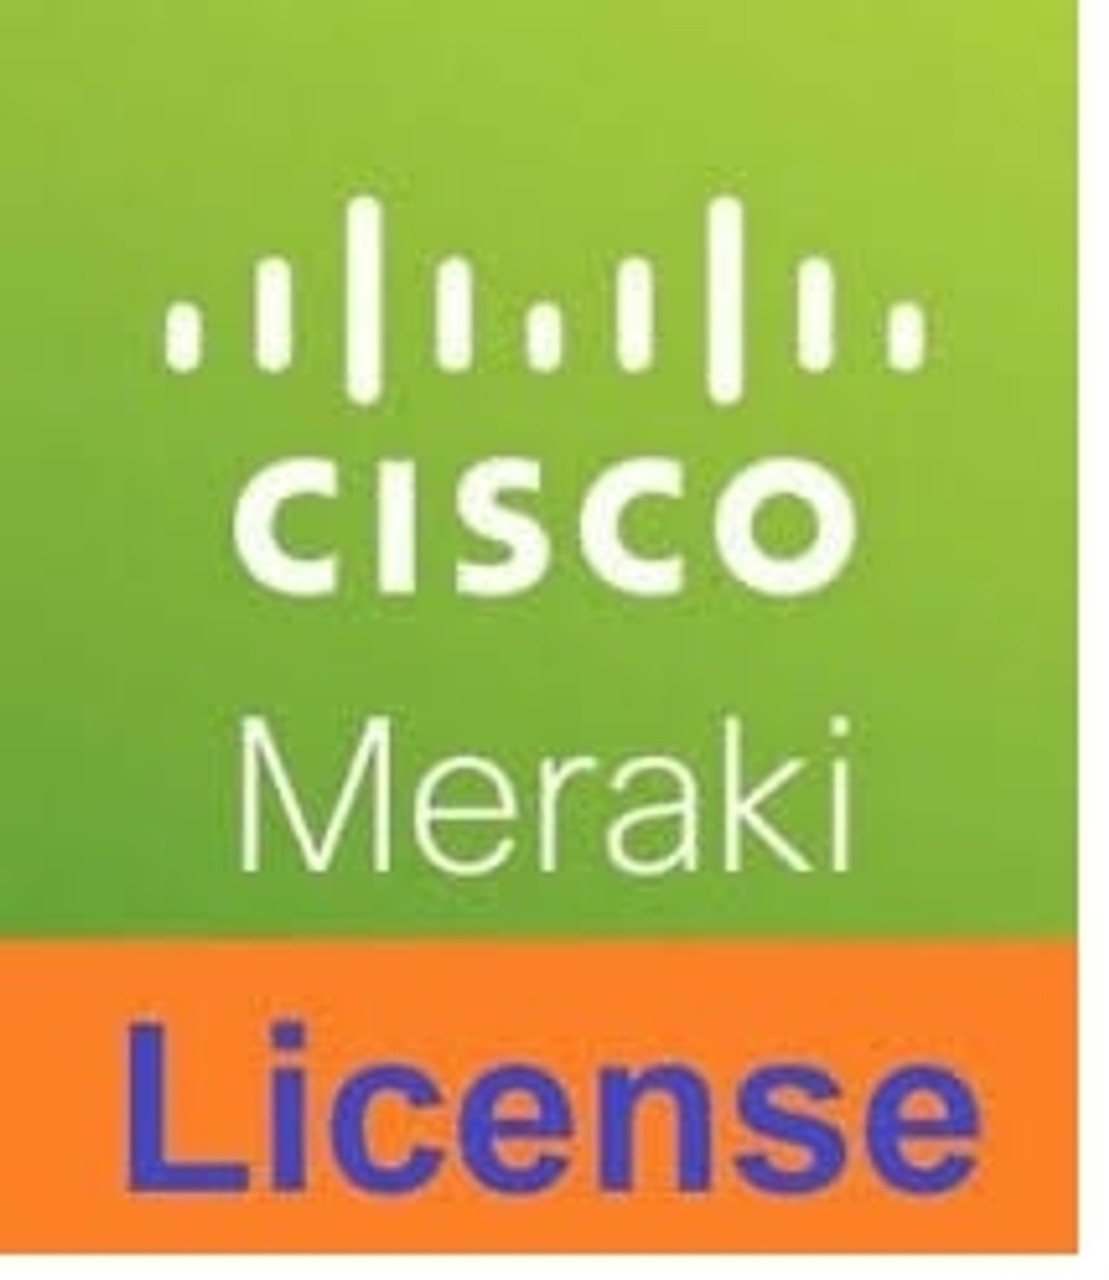 EOS Meraki MS420-24 Enterprise License and Support, 10 Year